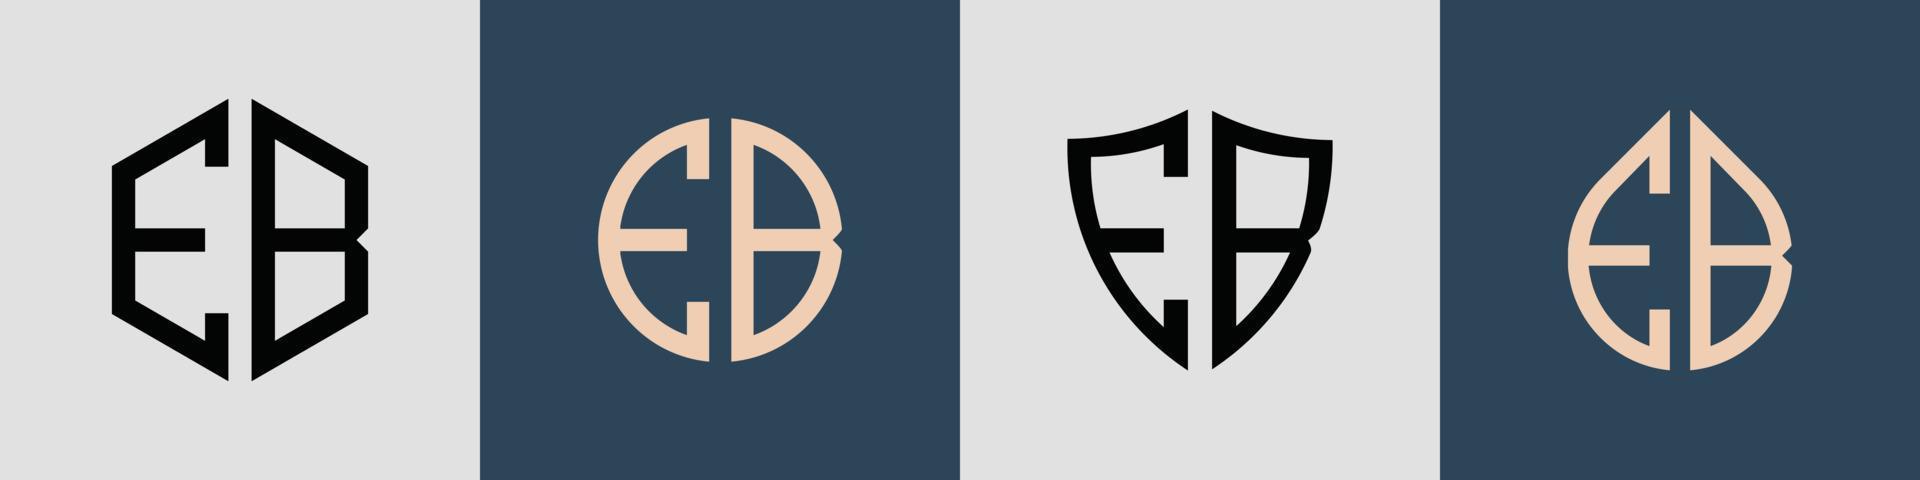 kreative einfache anfangsbuchstaben eb-logo-designs paket. vektor